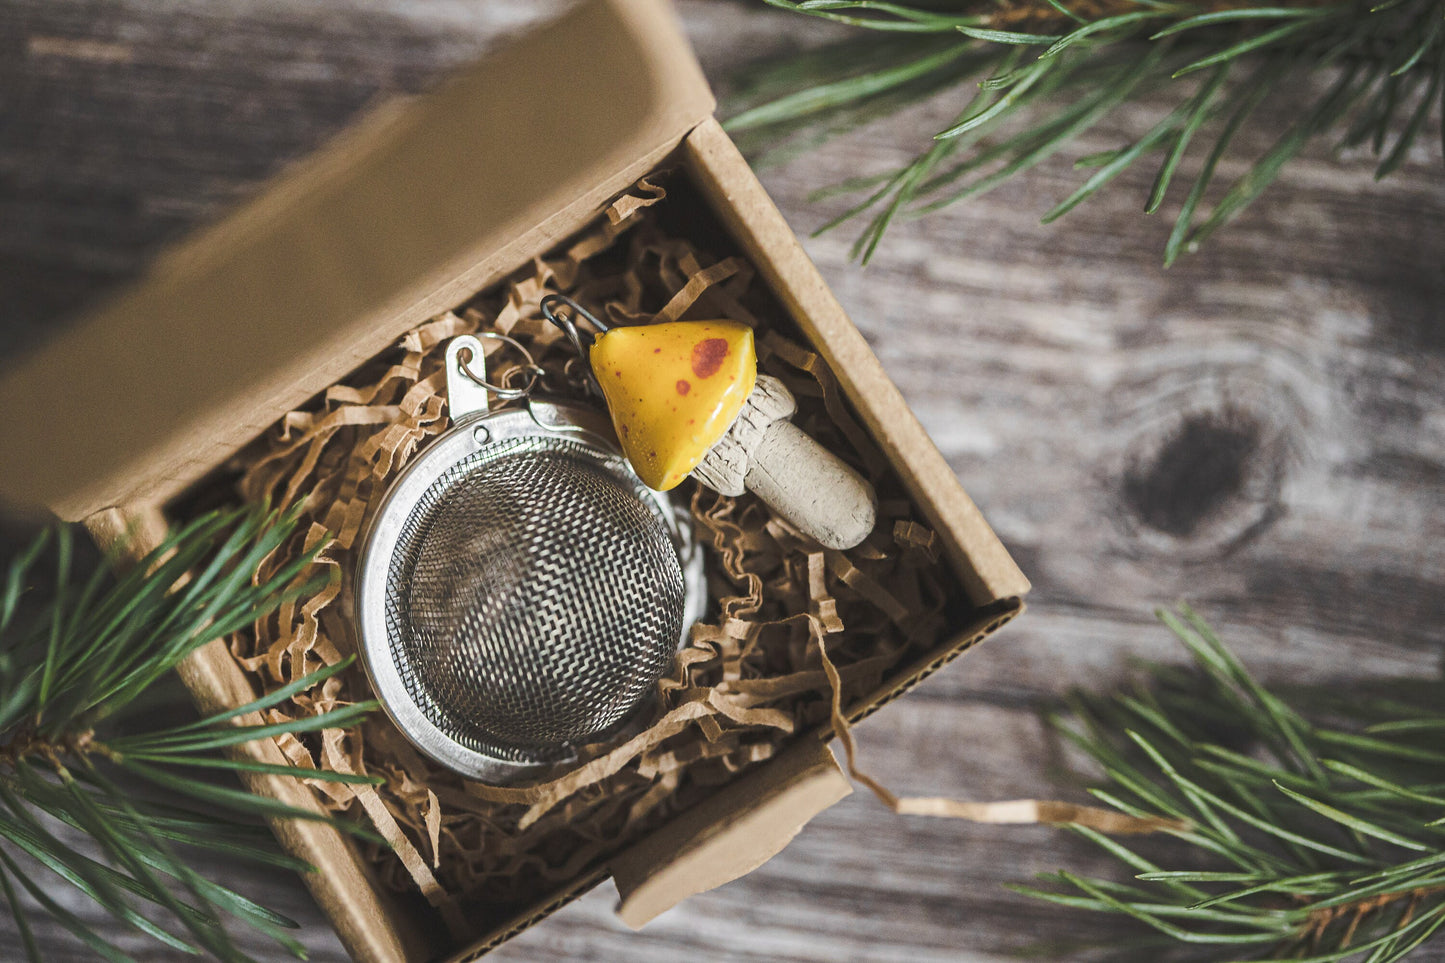 Loose leaf tea strainer with yellow dotted mushroom - Tea infuser with ceramic mushroom - Herbal tea steeper with fungi charm